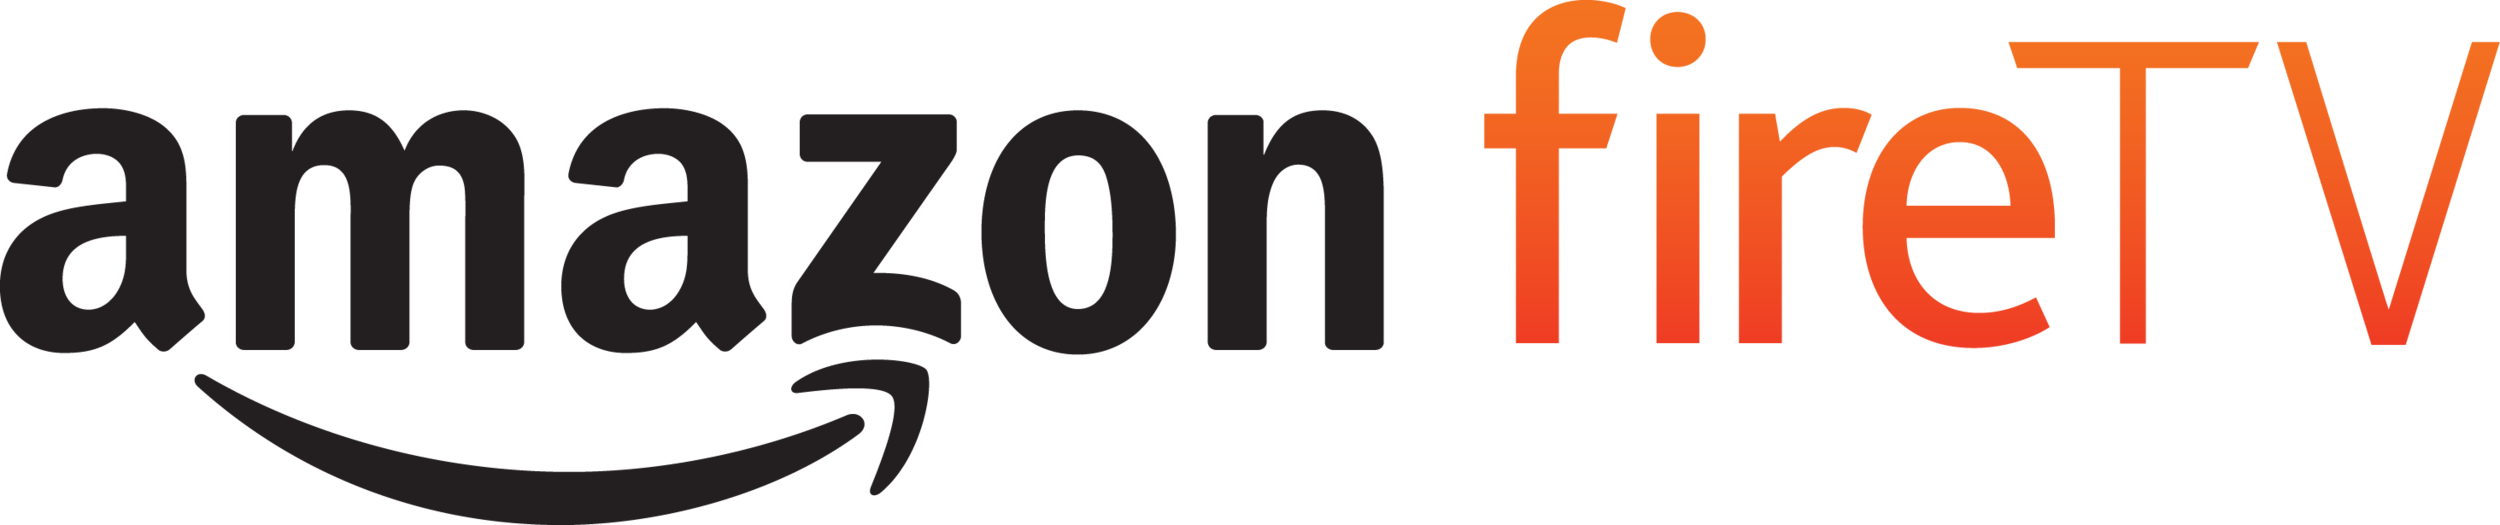 Amazon_Fire_TV_Logo_RGB.png